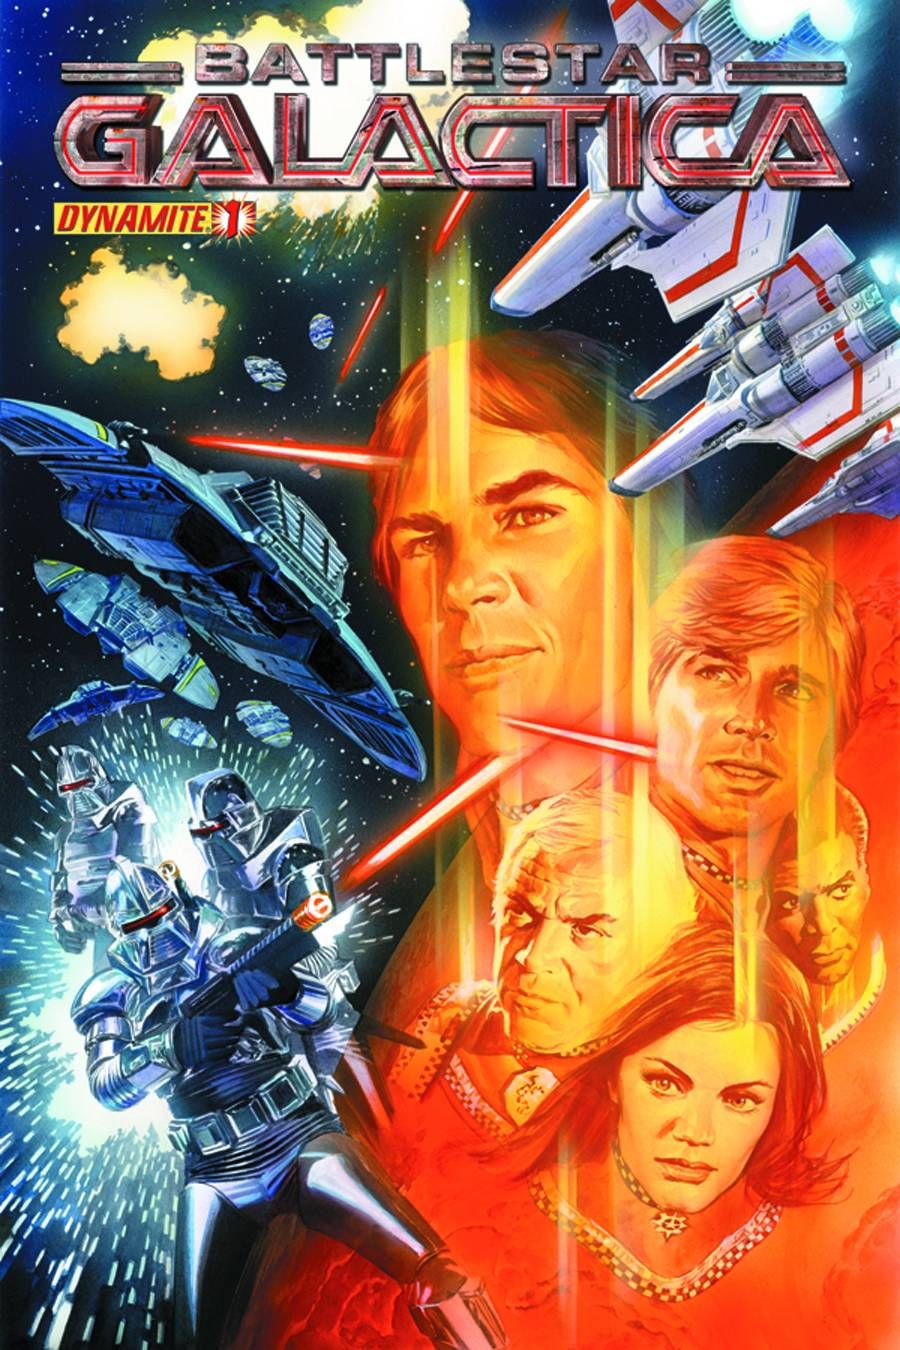 Battlestar Galactica #1 Comic